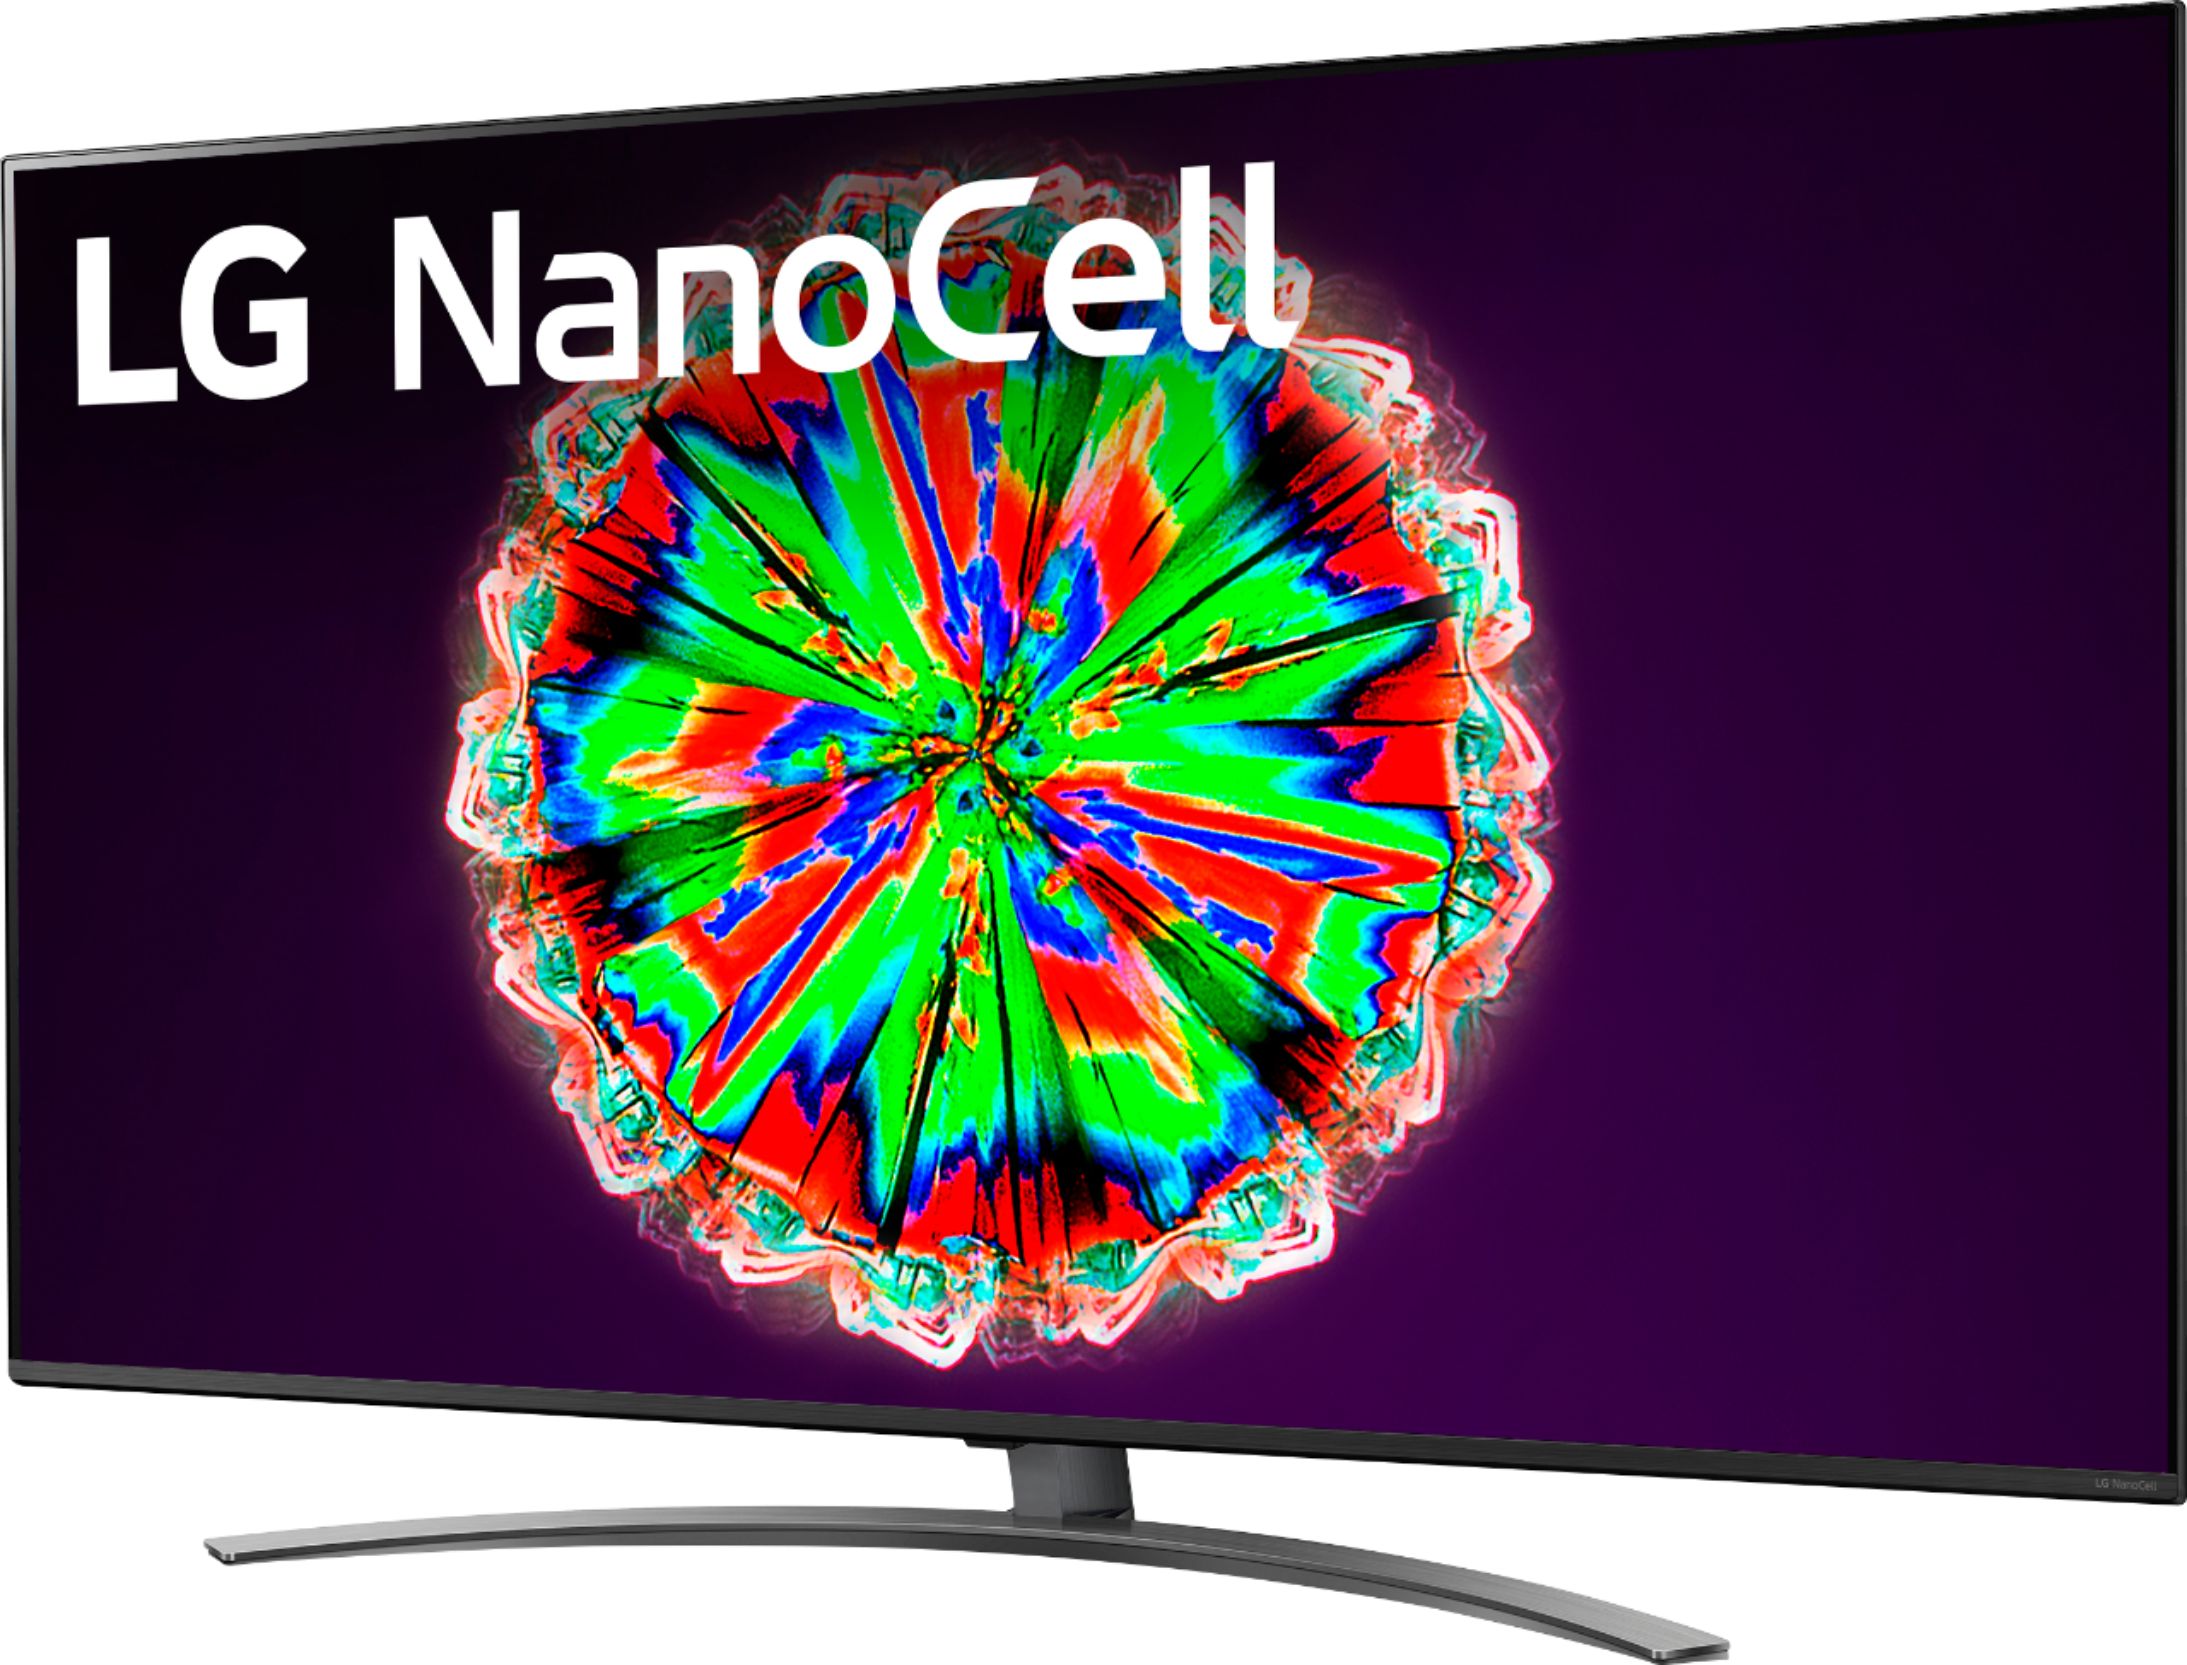 Lg LED NanoCell 55 55SM8000PSA UHD Smart TV, falabella.com